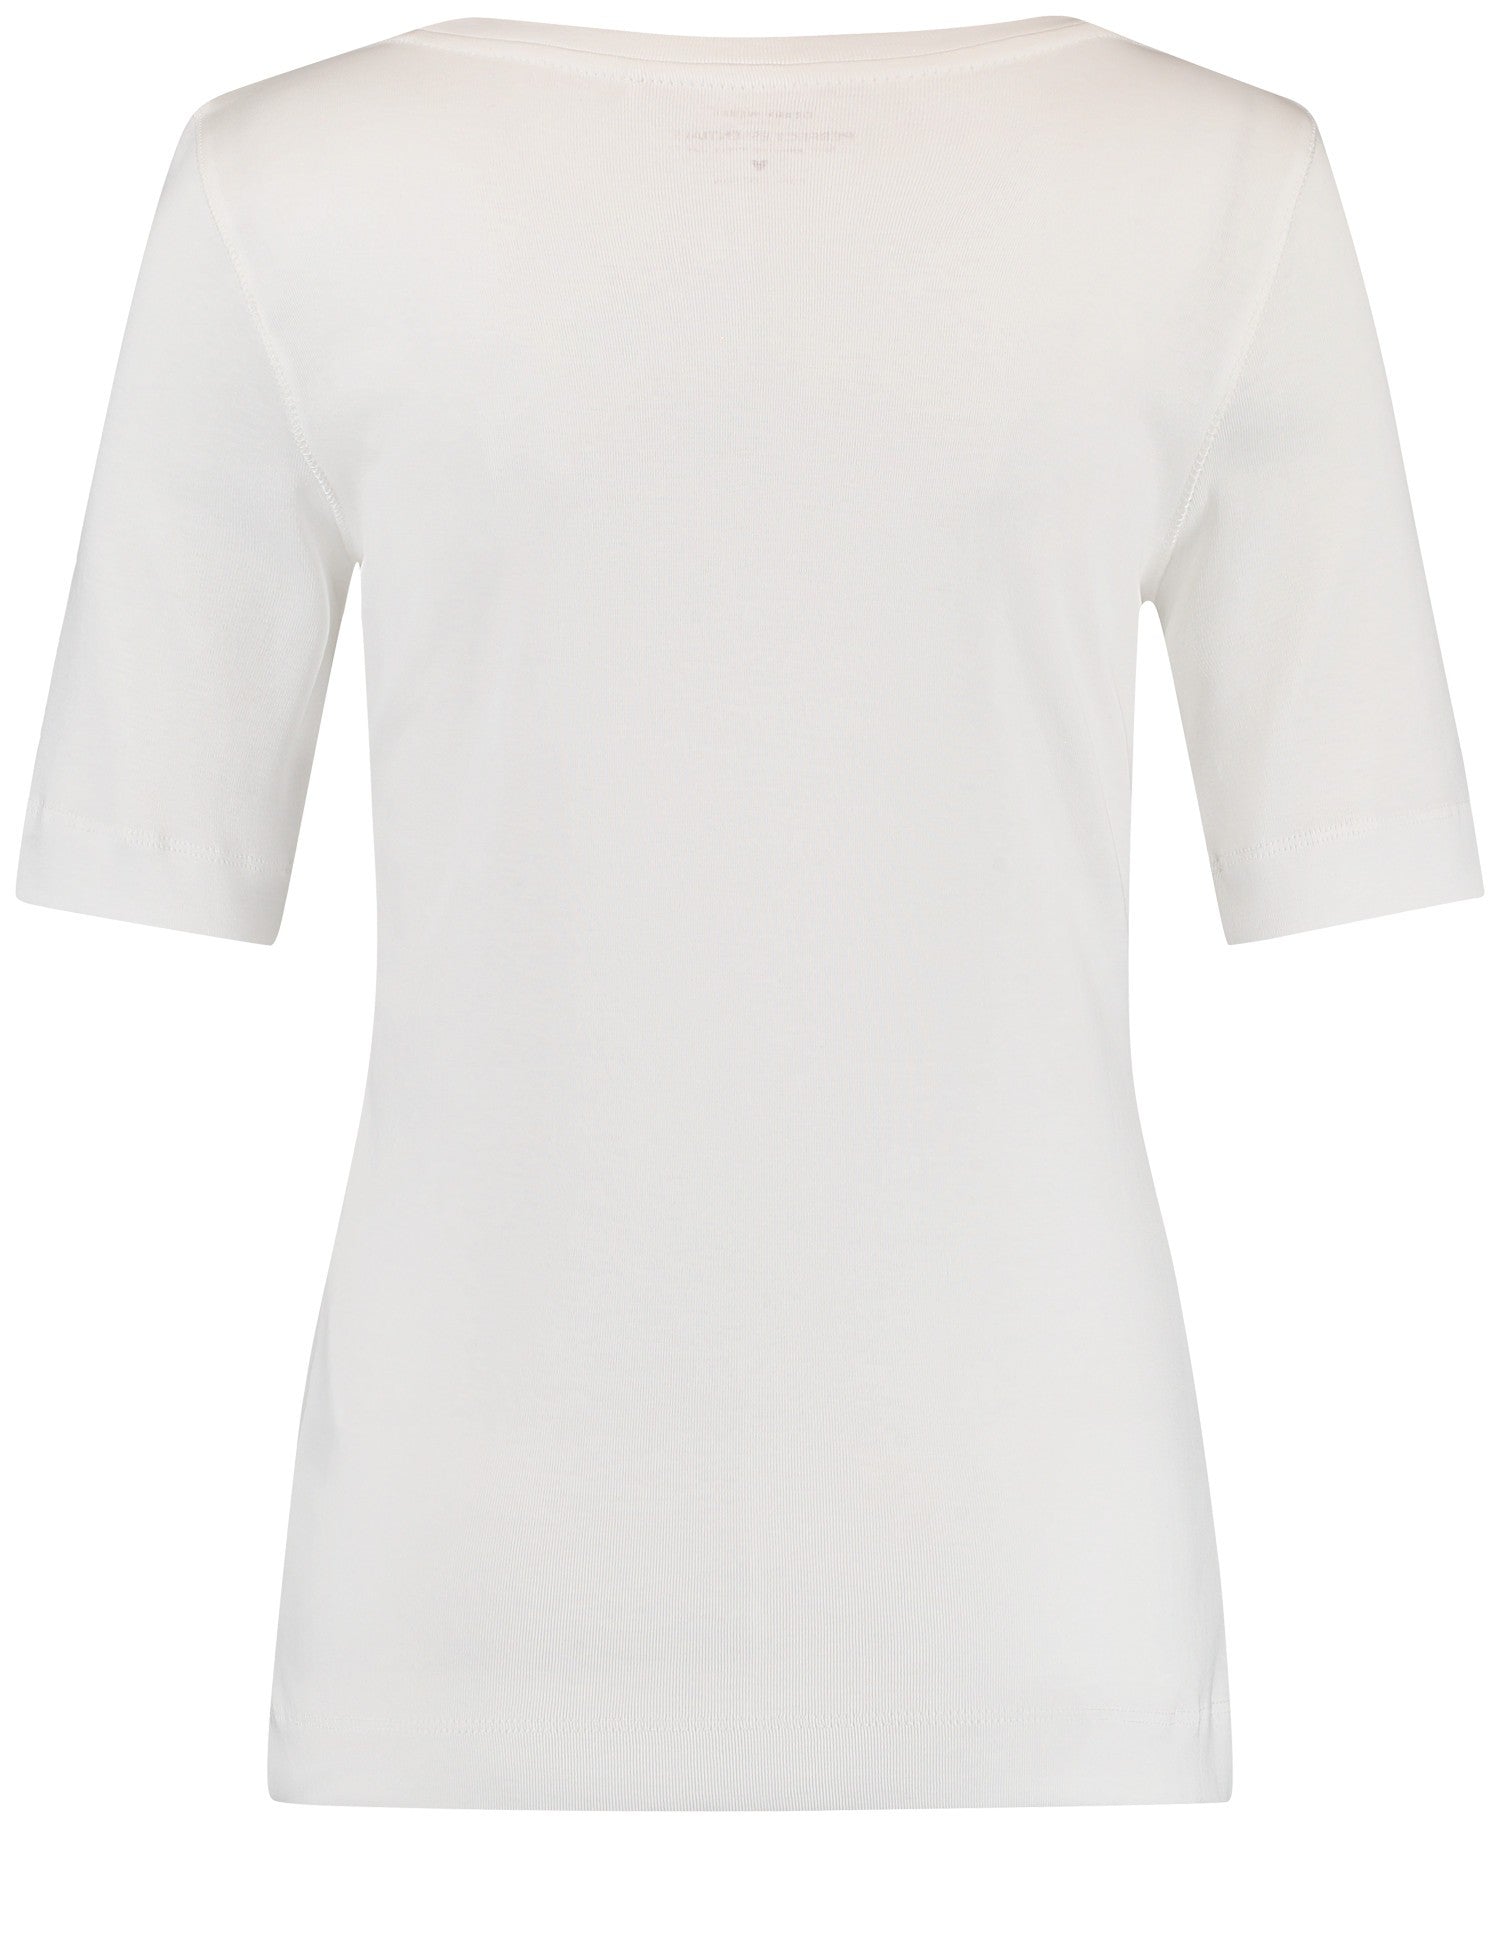 Gerry Weber Basic T-Shirt Off White